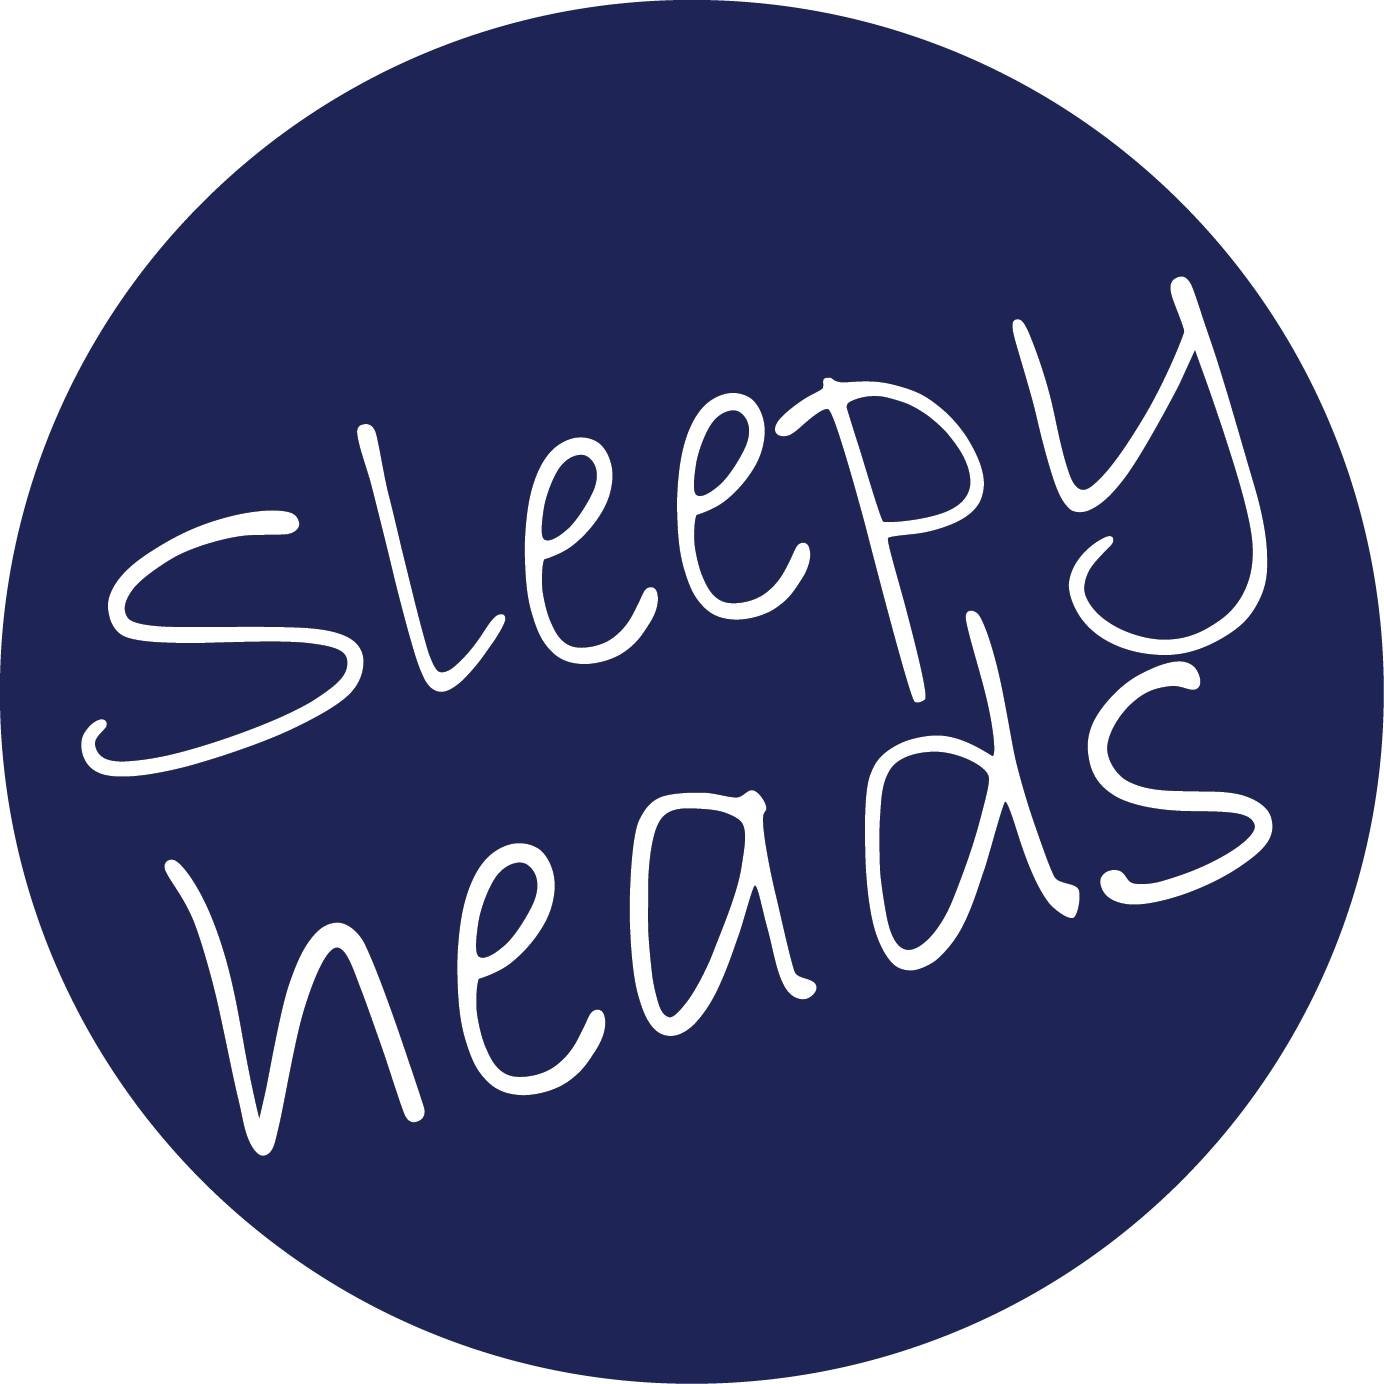 Sleepy heads